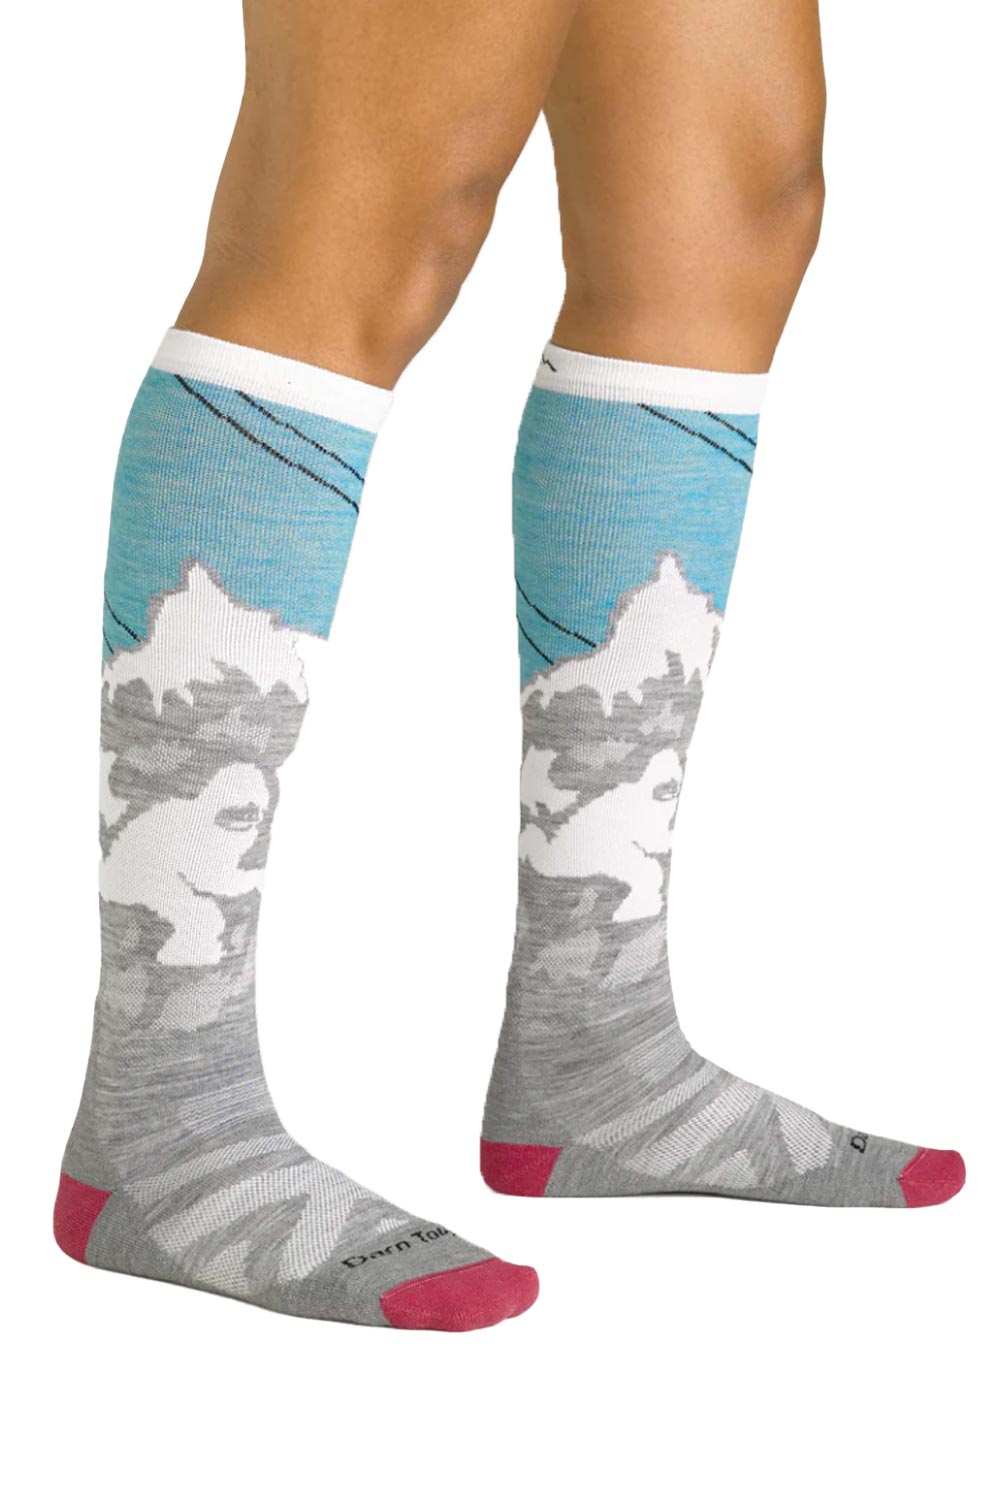 women's Darn Tough ski socks, Yeti graphic